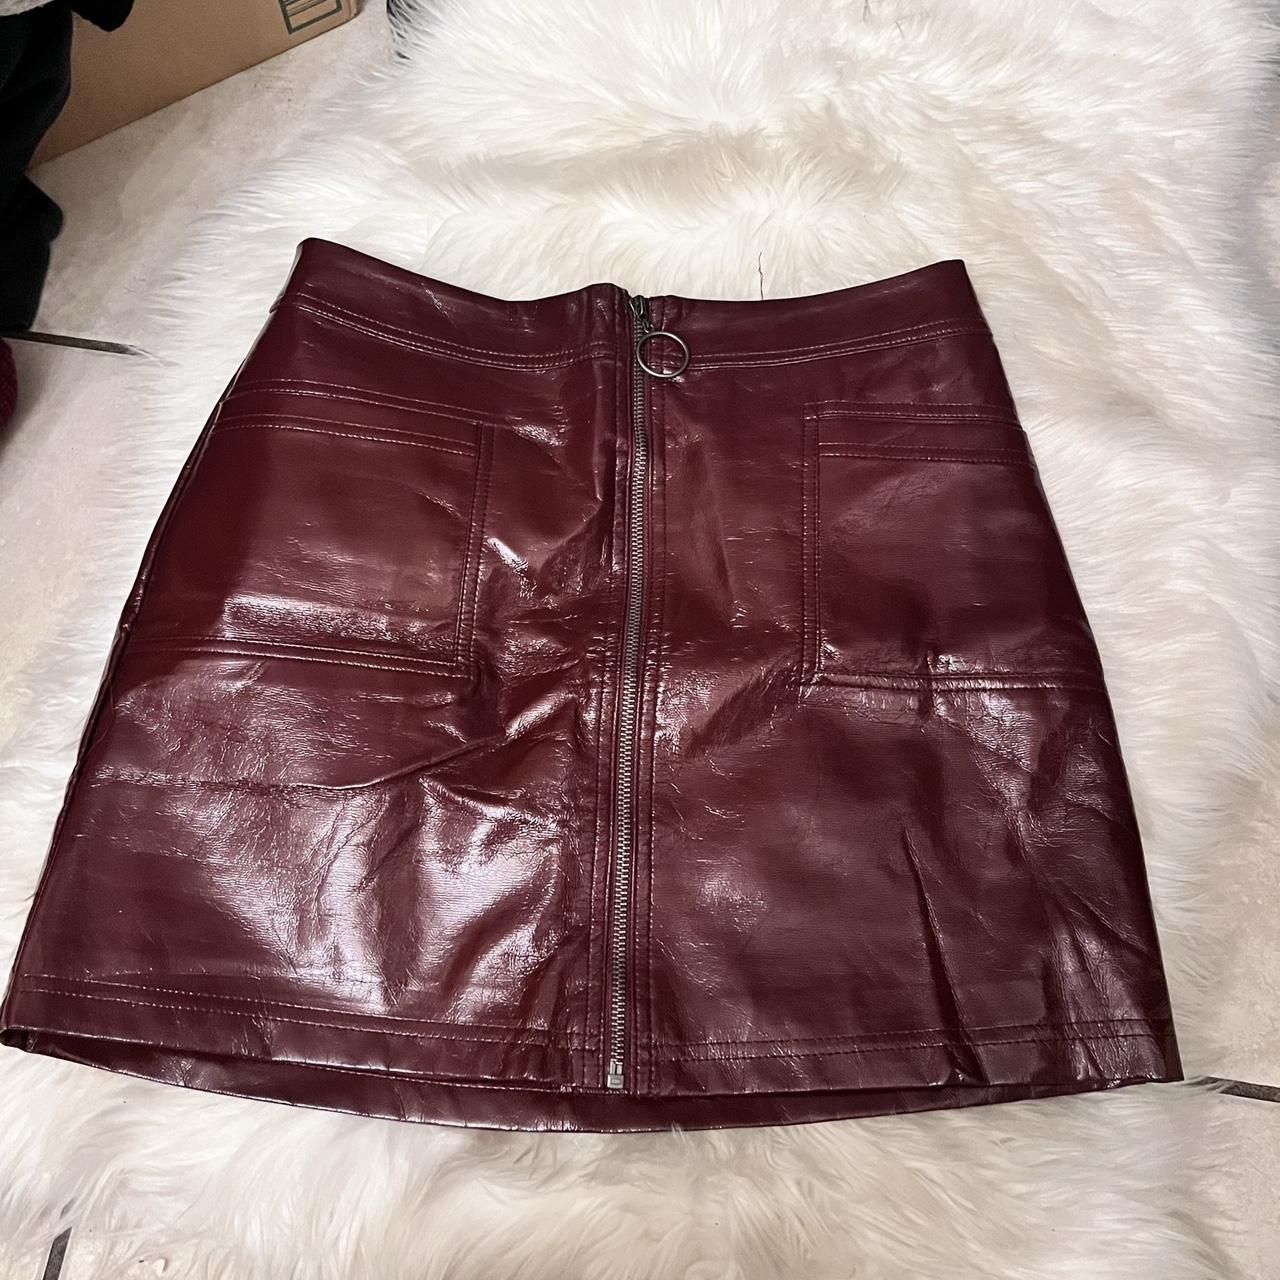 Faux leather burgundy skirt 🖤 size medium - Depop